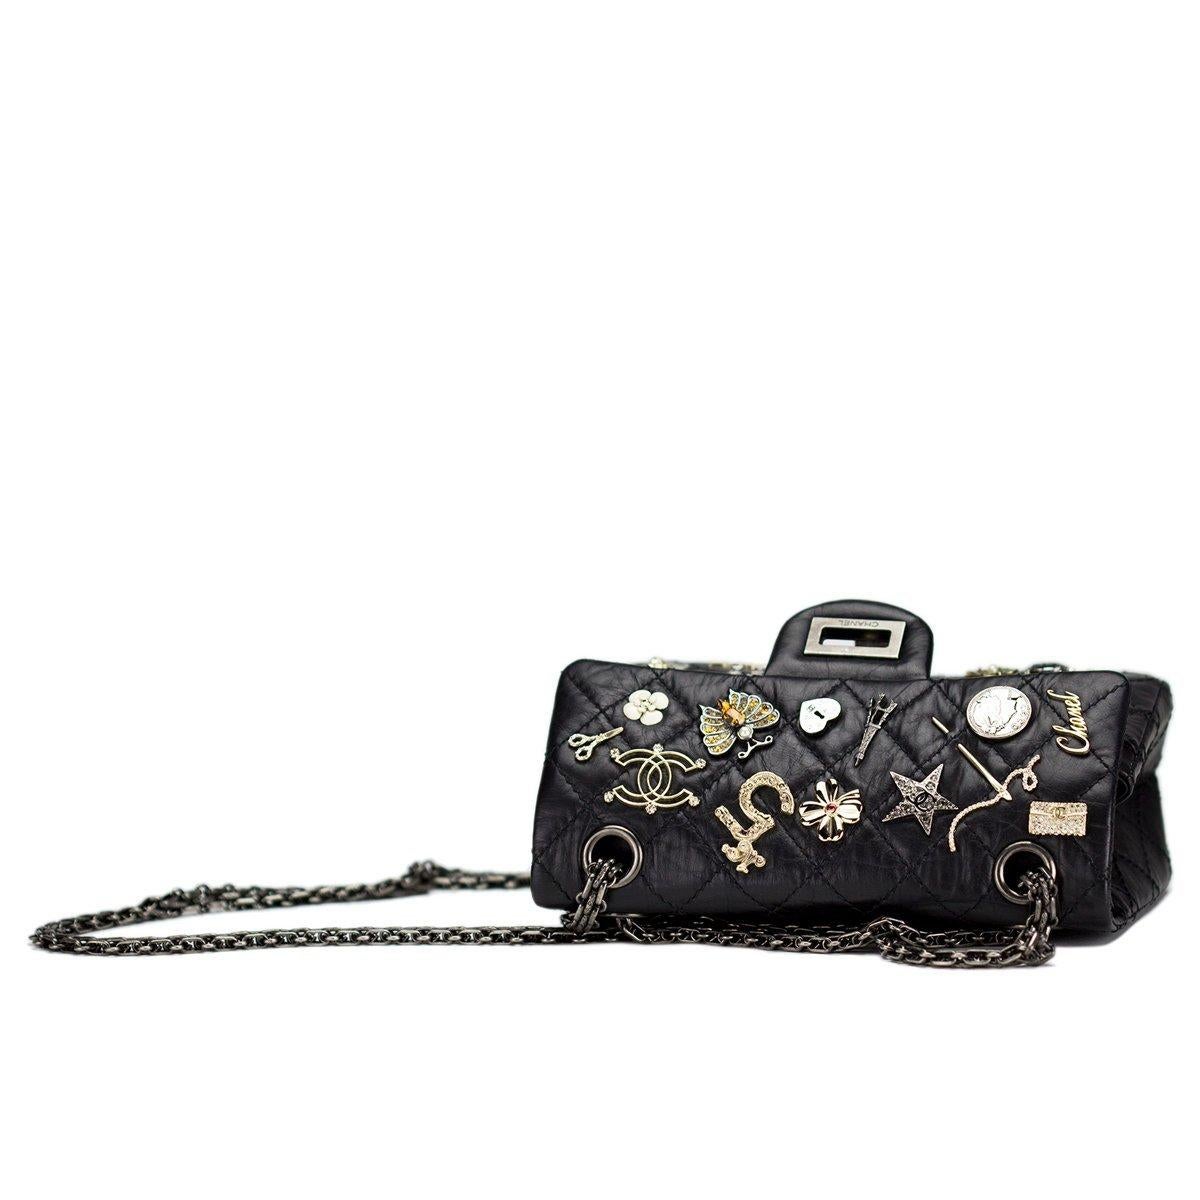 Chanel 2012 Small Reissue Charm Paris Icons Mini Flap Bag Limited Edition Bag 1